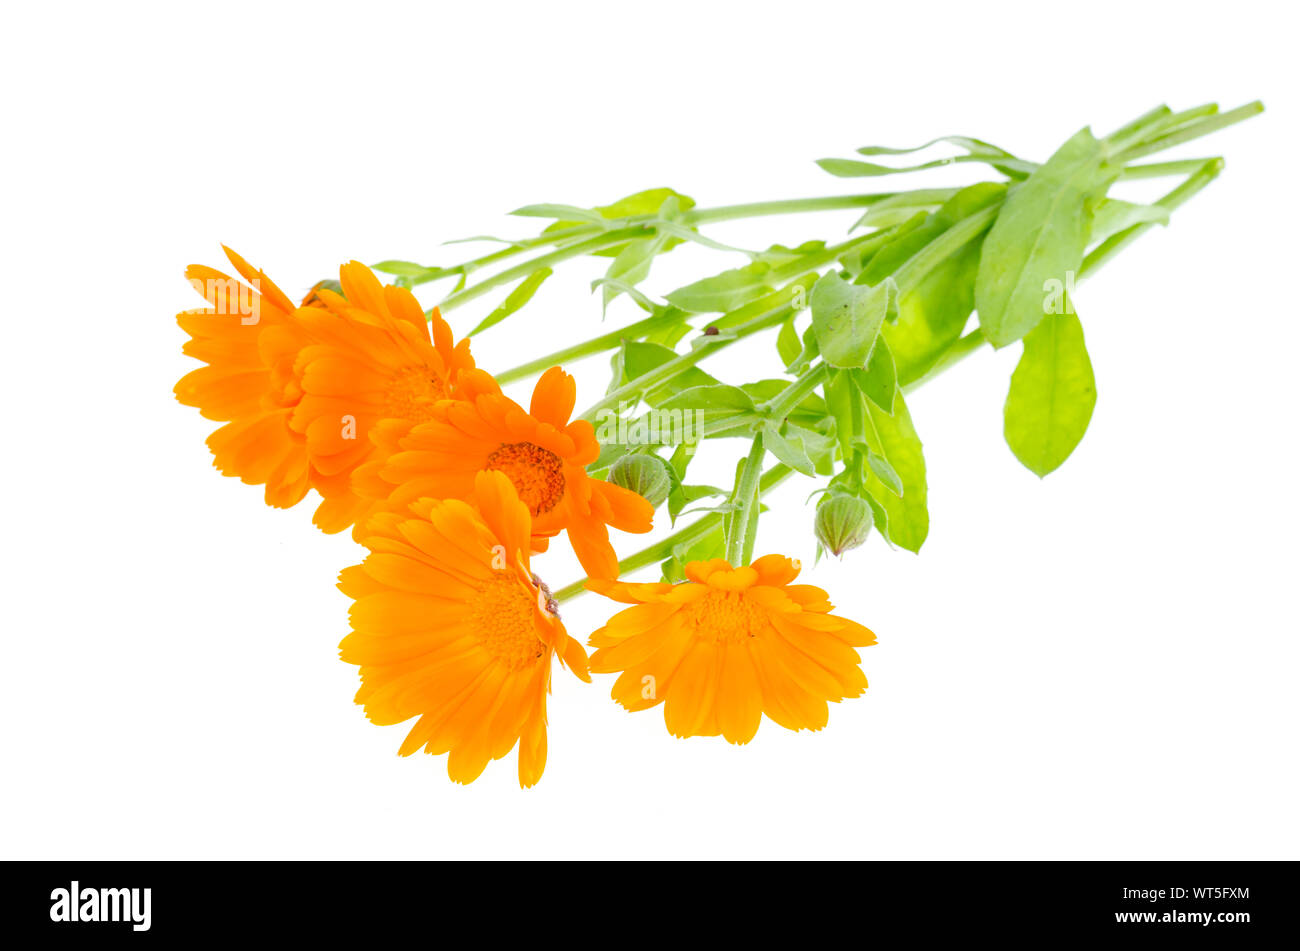 Medicinal plant with orange flowers Calendula officinalis. Studio Photo Stock Photo